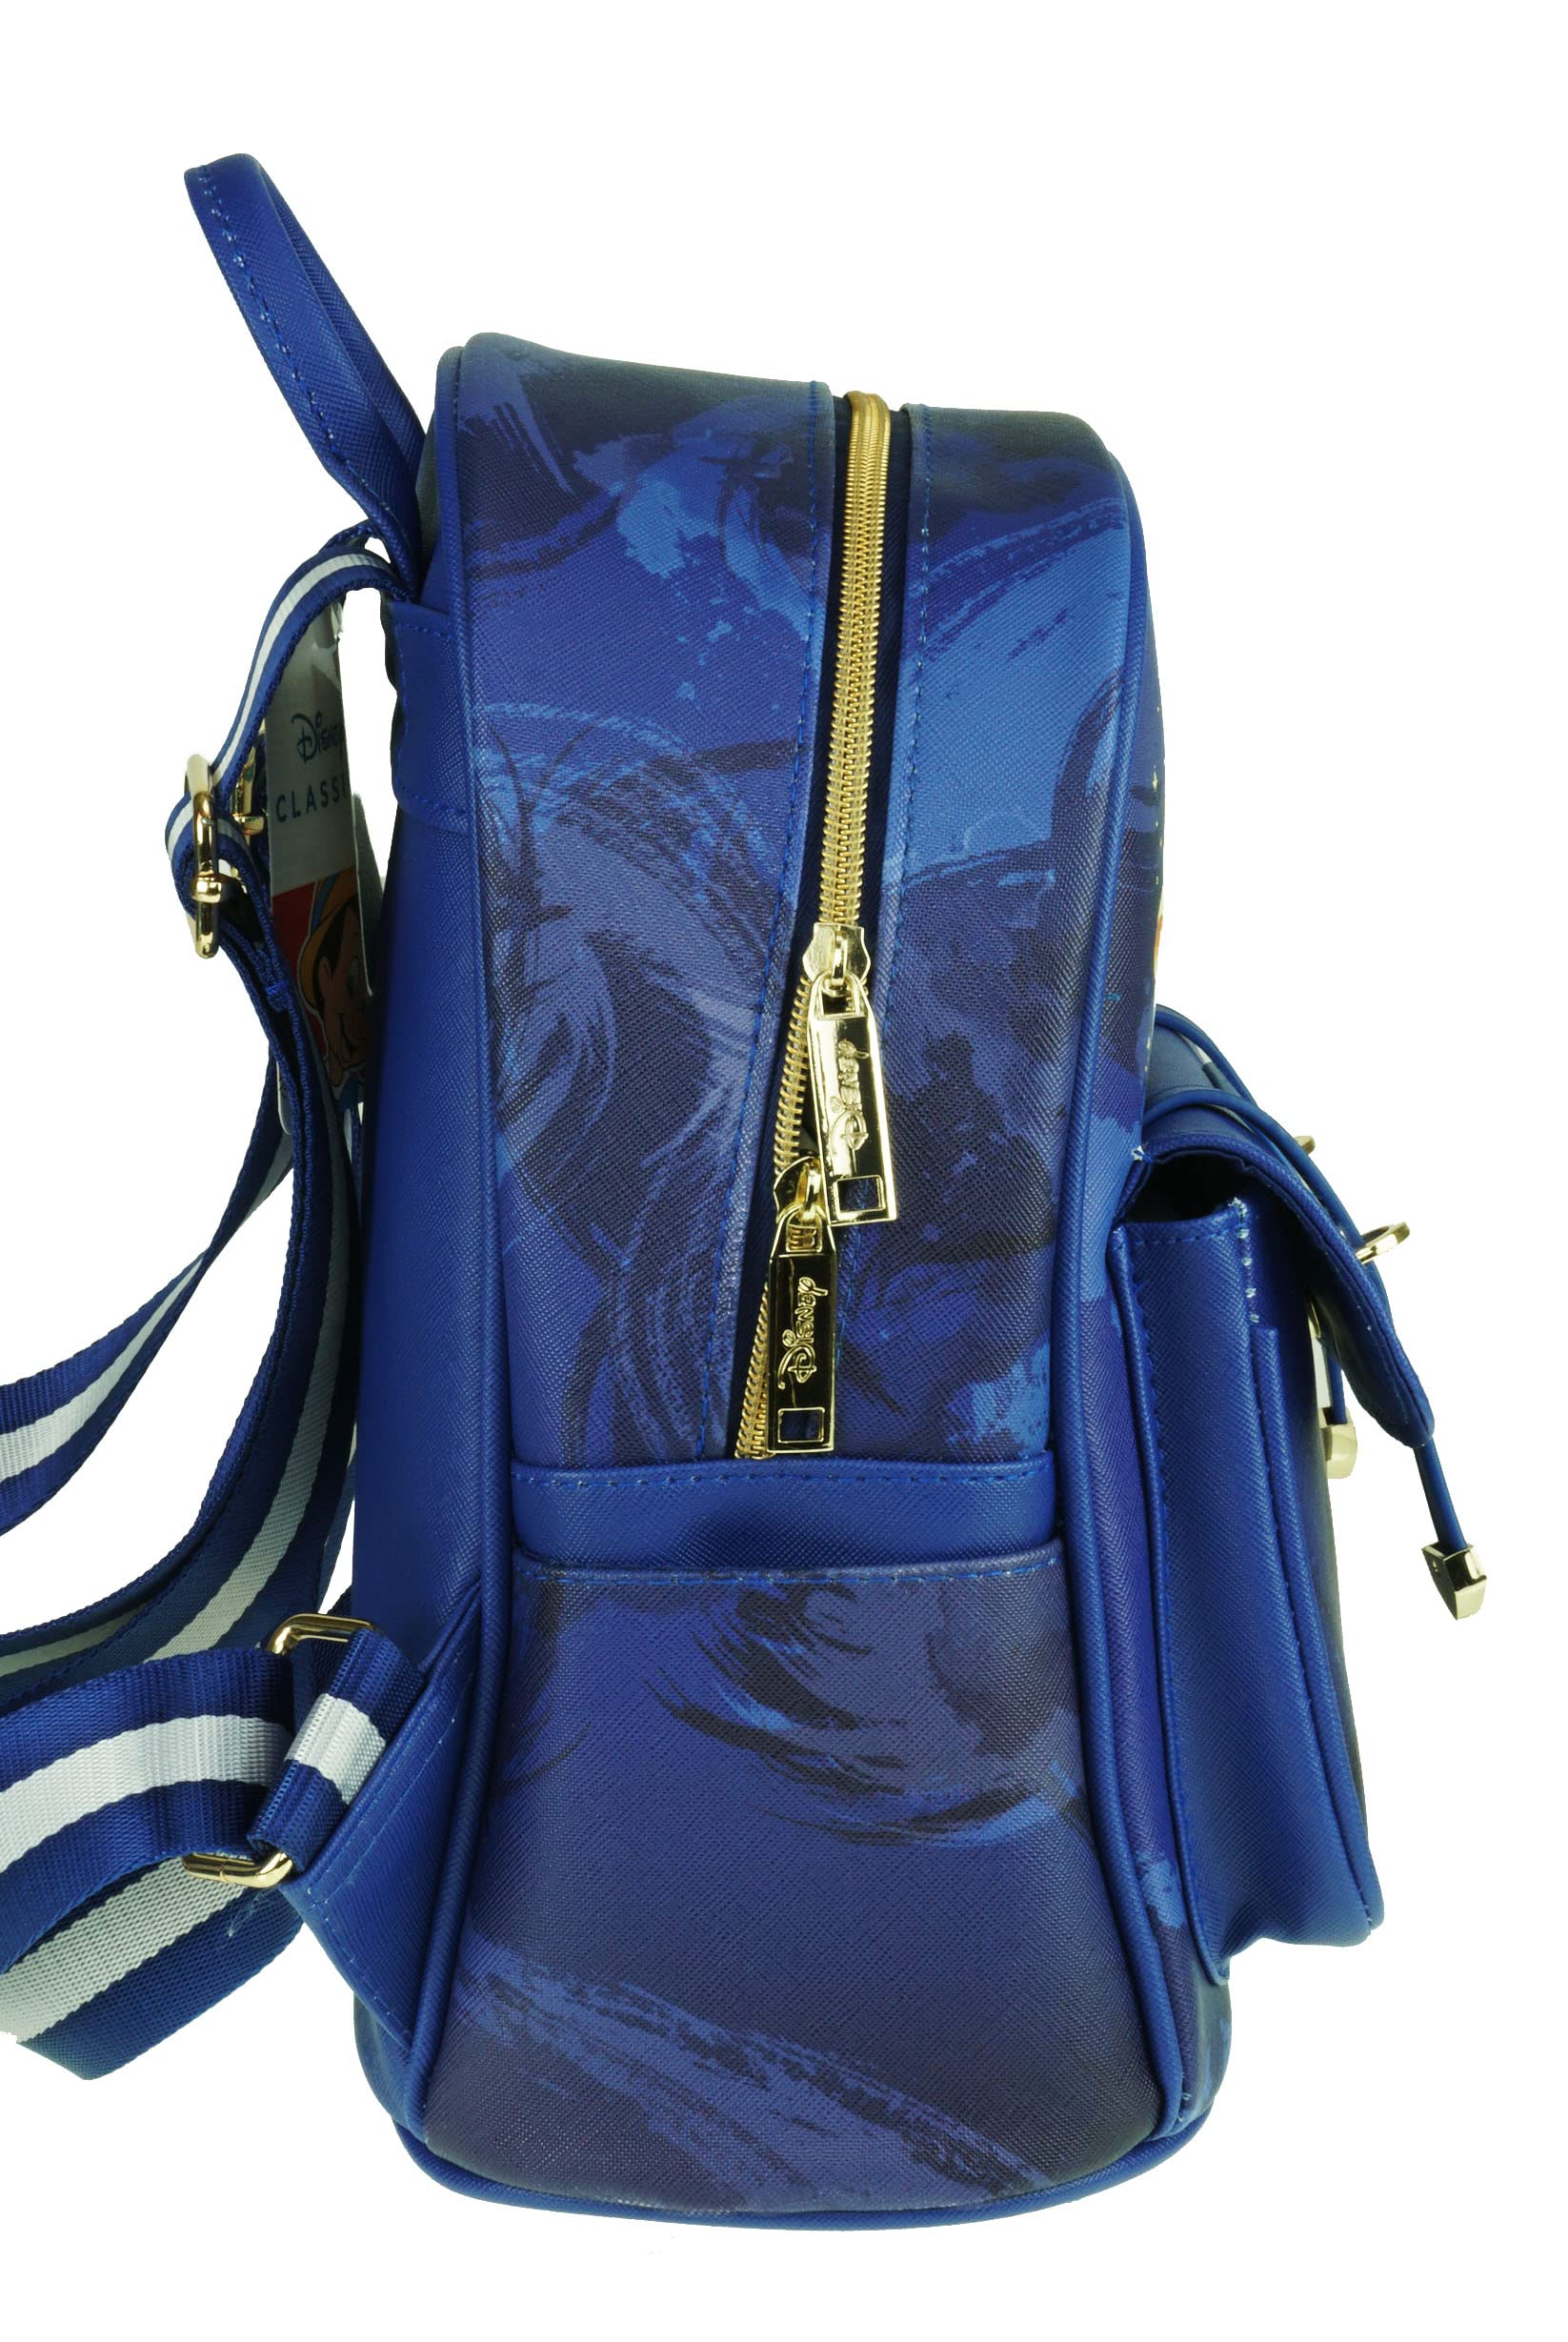 KBNL Pinocchio 11inch Vegan Leather Mini Backpack - A21832,Multicoloured,Medium